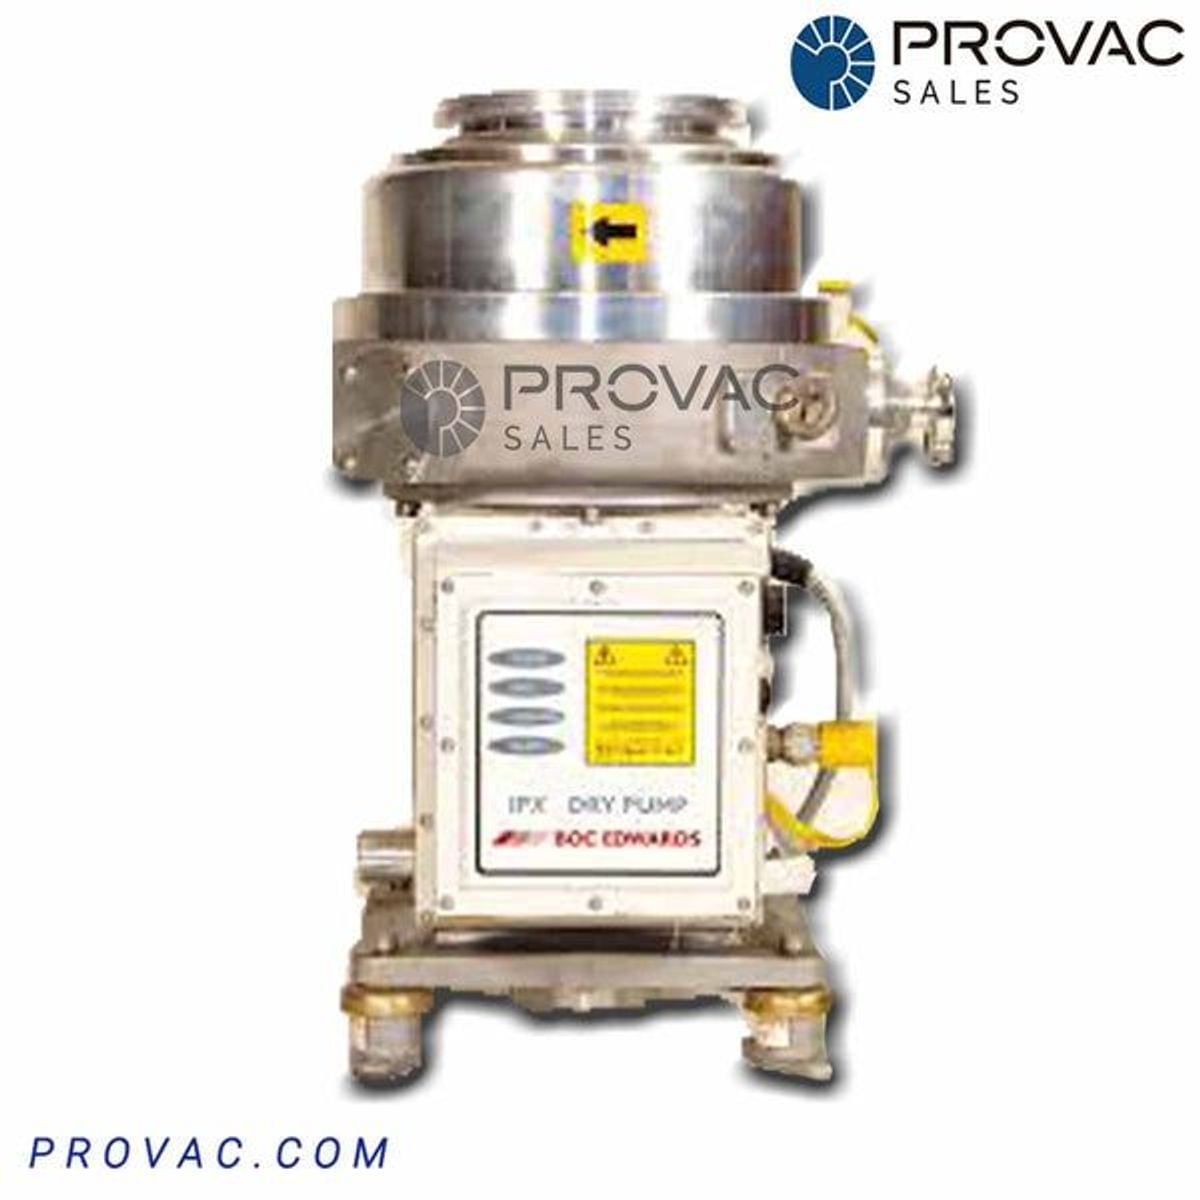 Edwards iPX-500A Dry Pump, Rebuilt Image 1